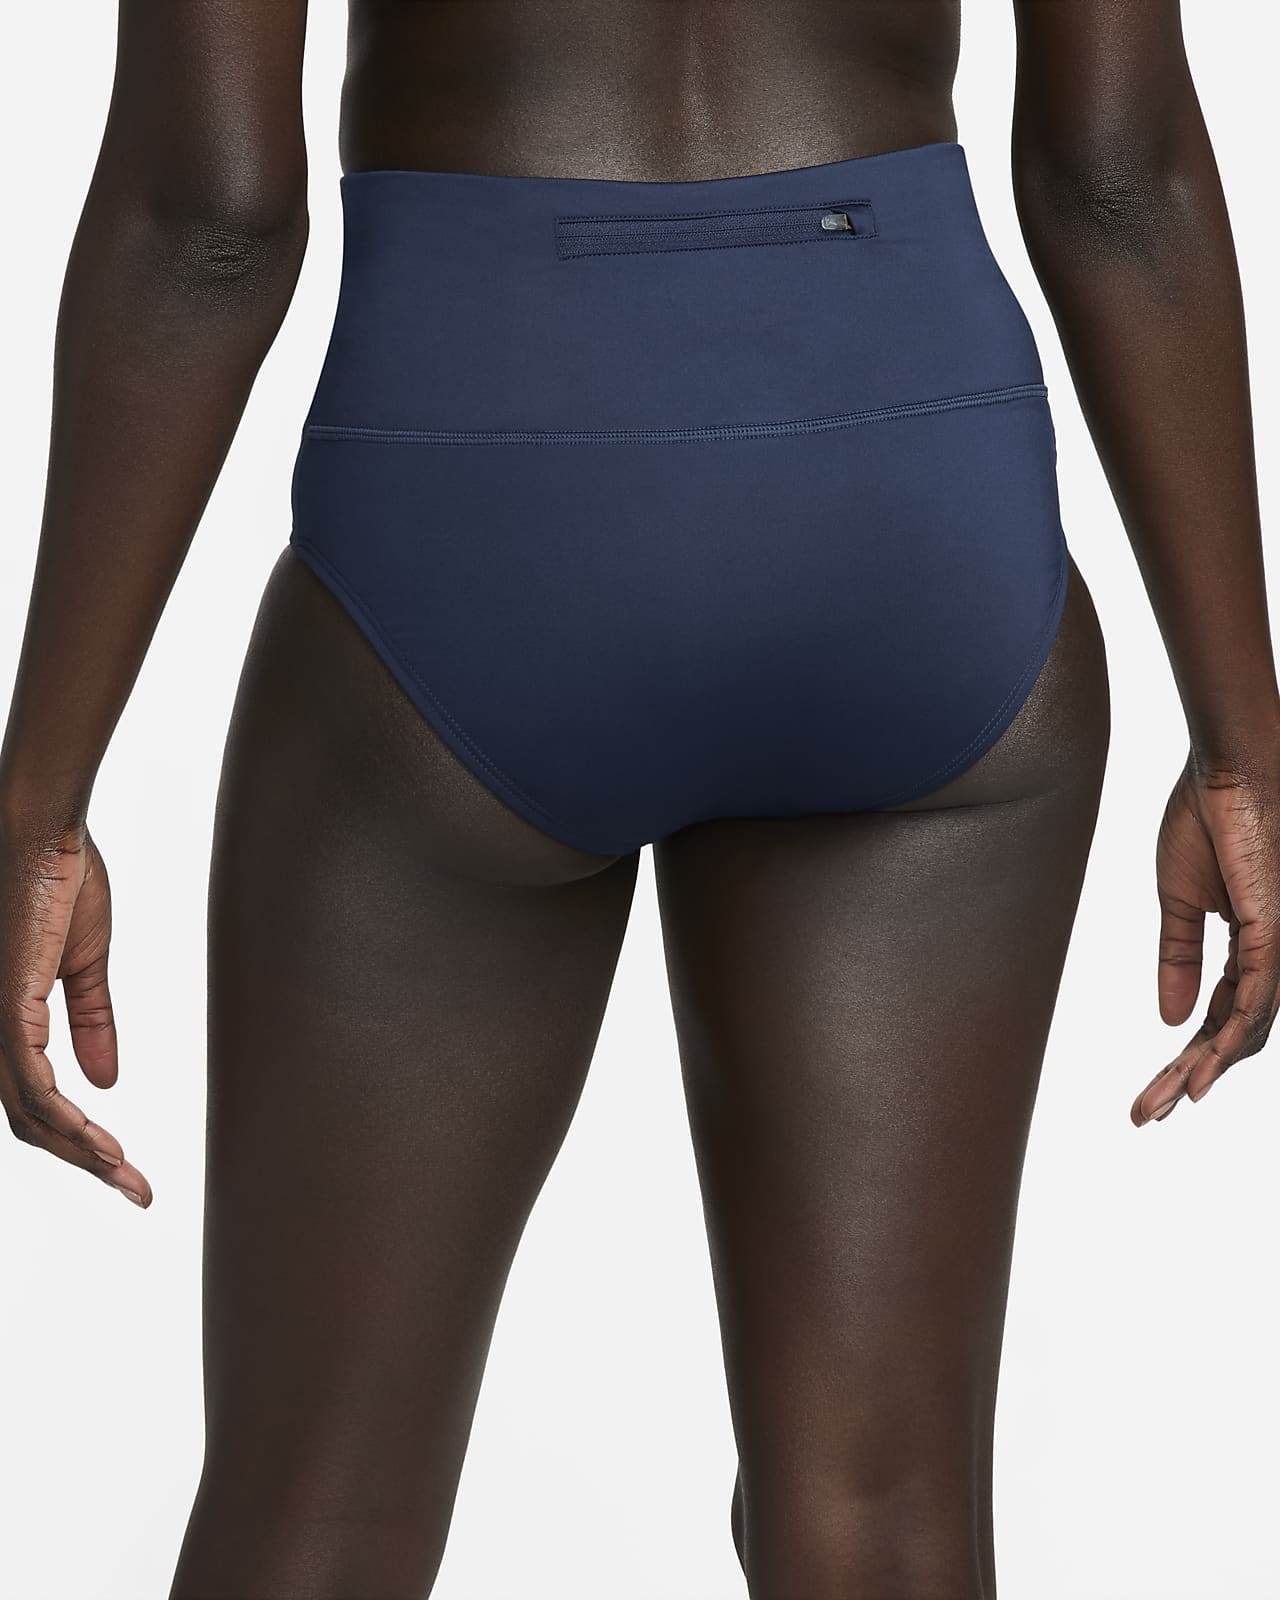 $59 Nike Women's Solid Black Full Coverage Bikini Brief Bottom Swimwear  Size L